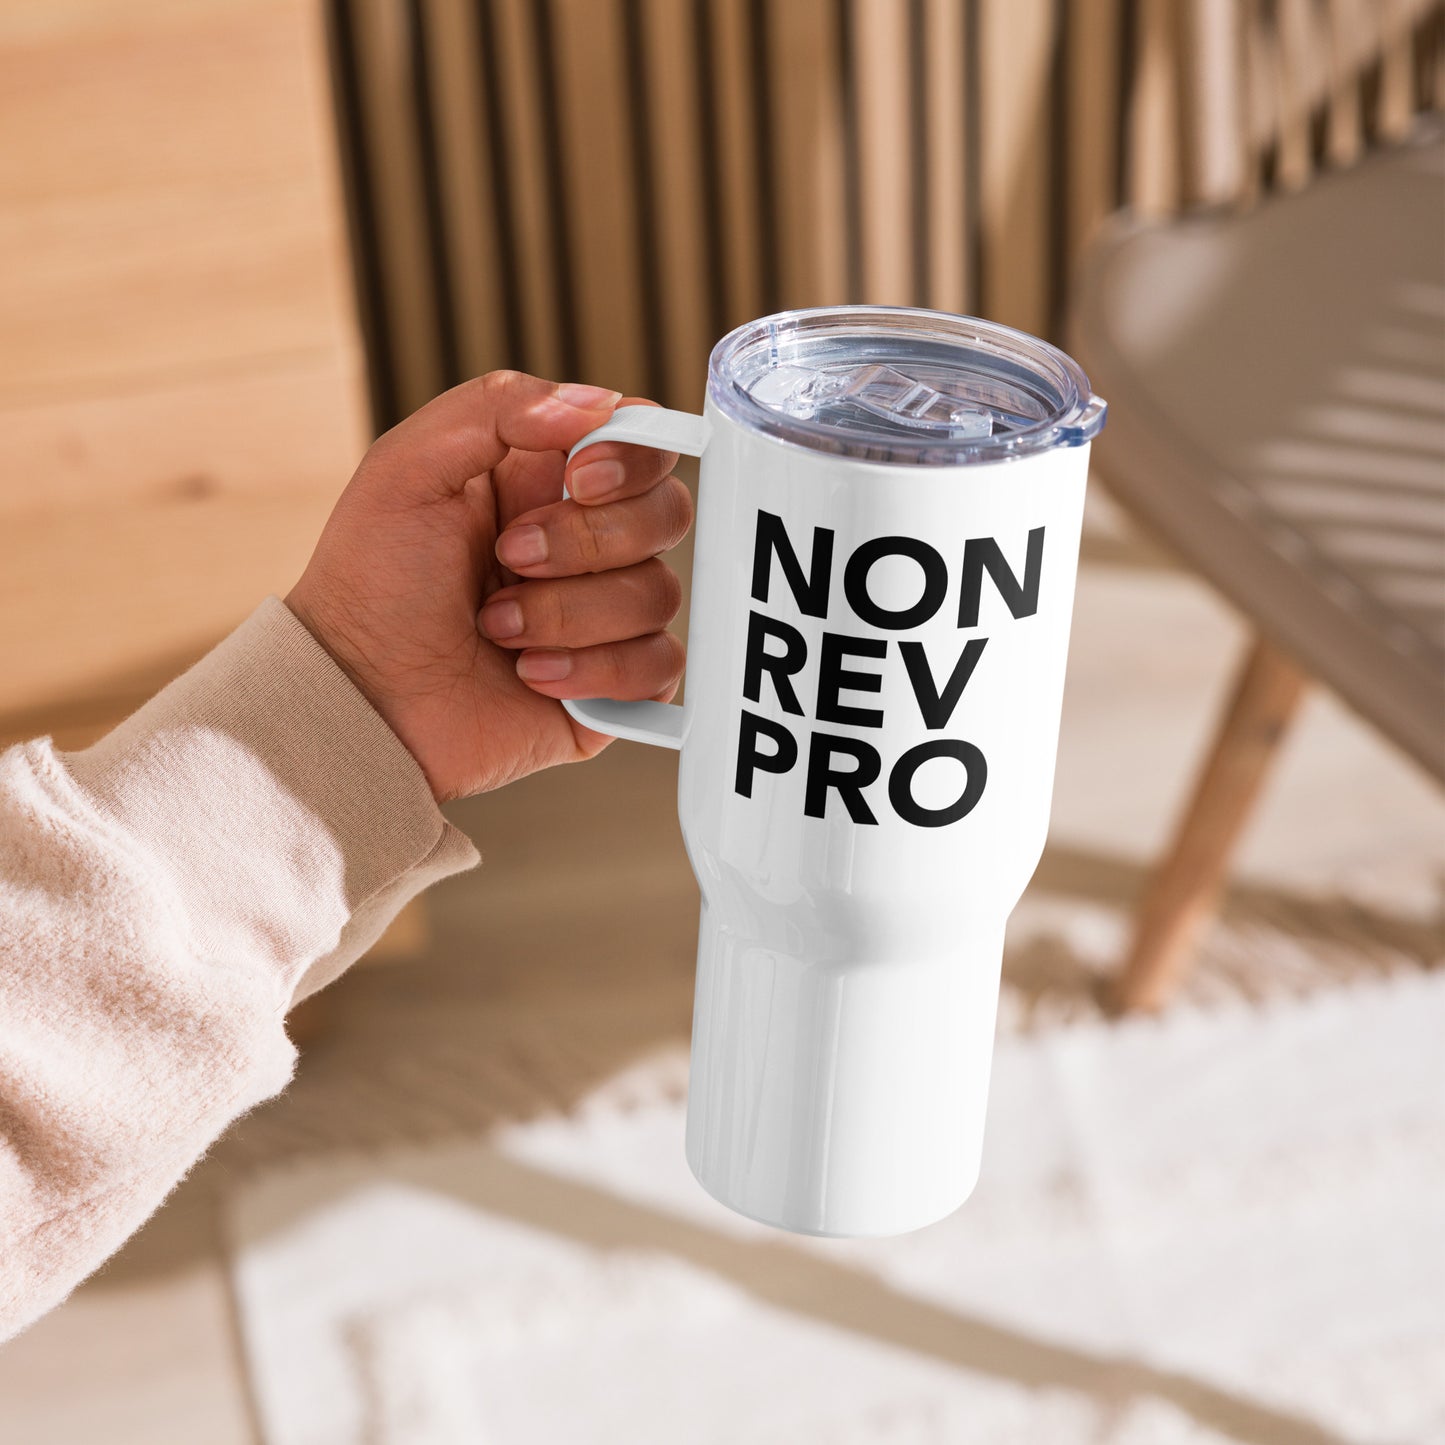 Non Rev Pro Travel mug with a handle